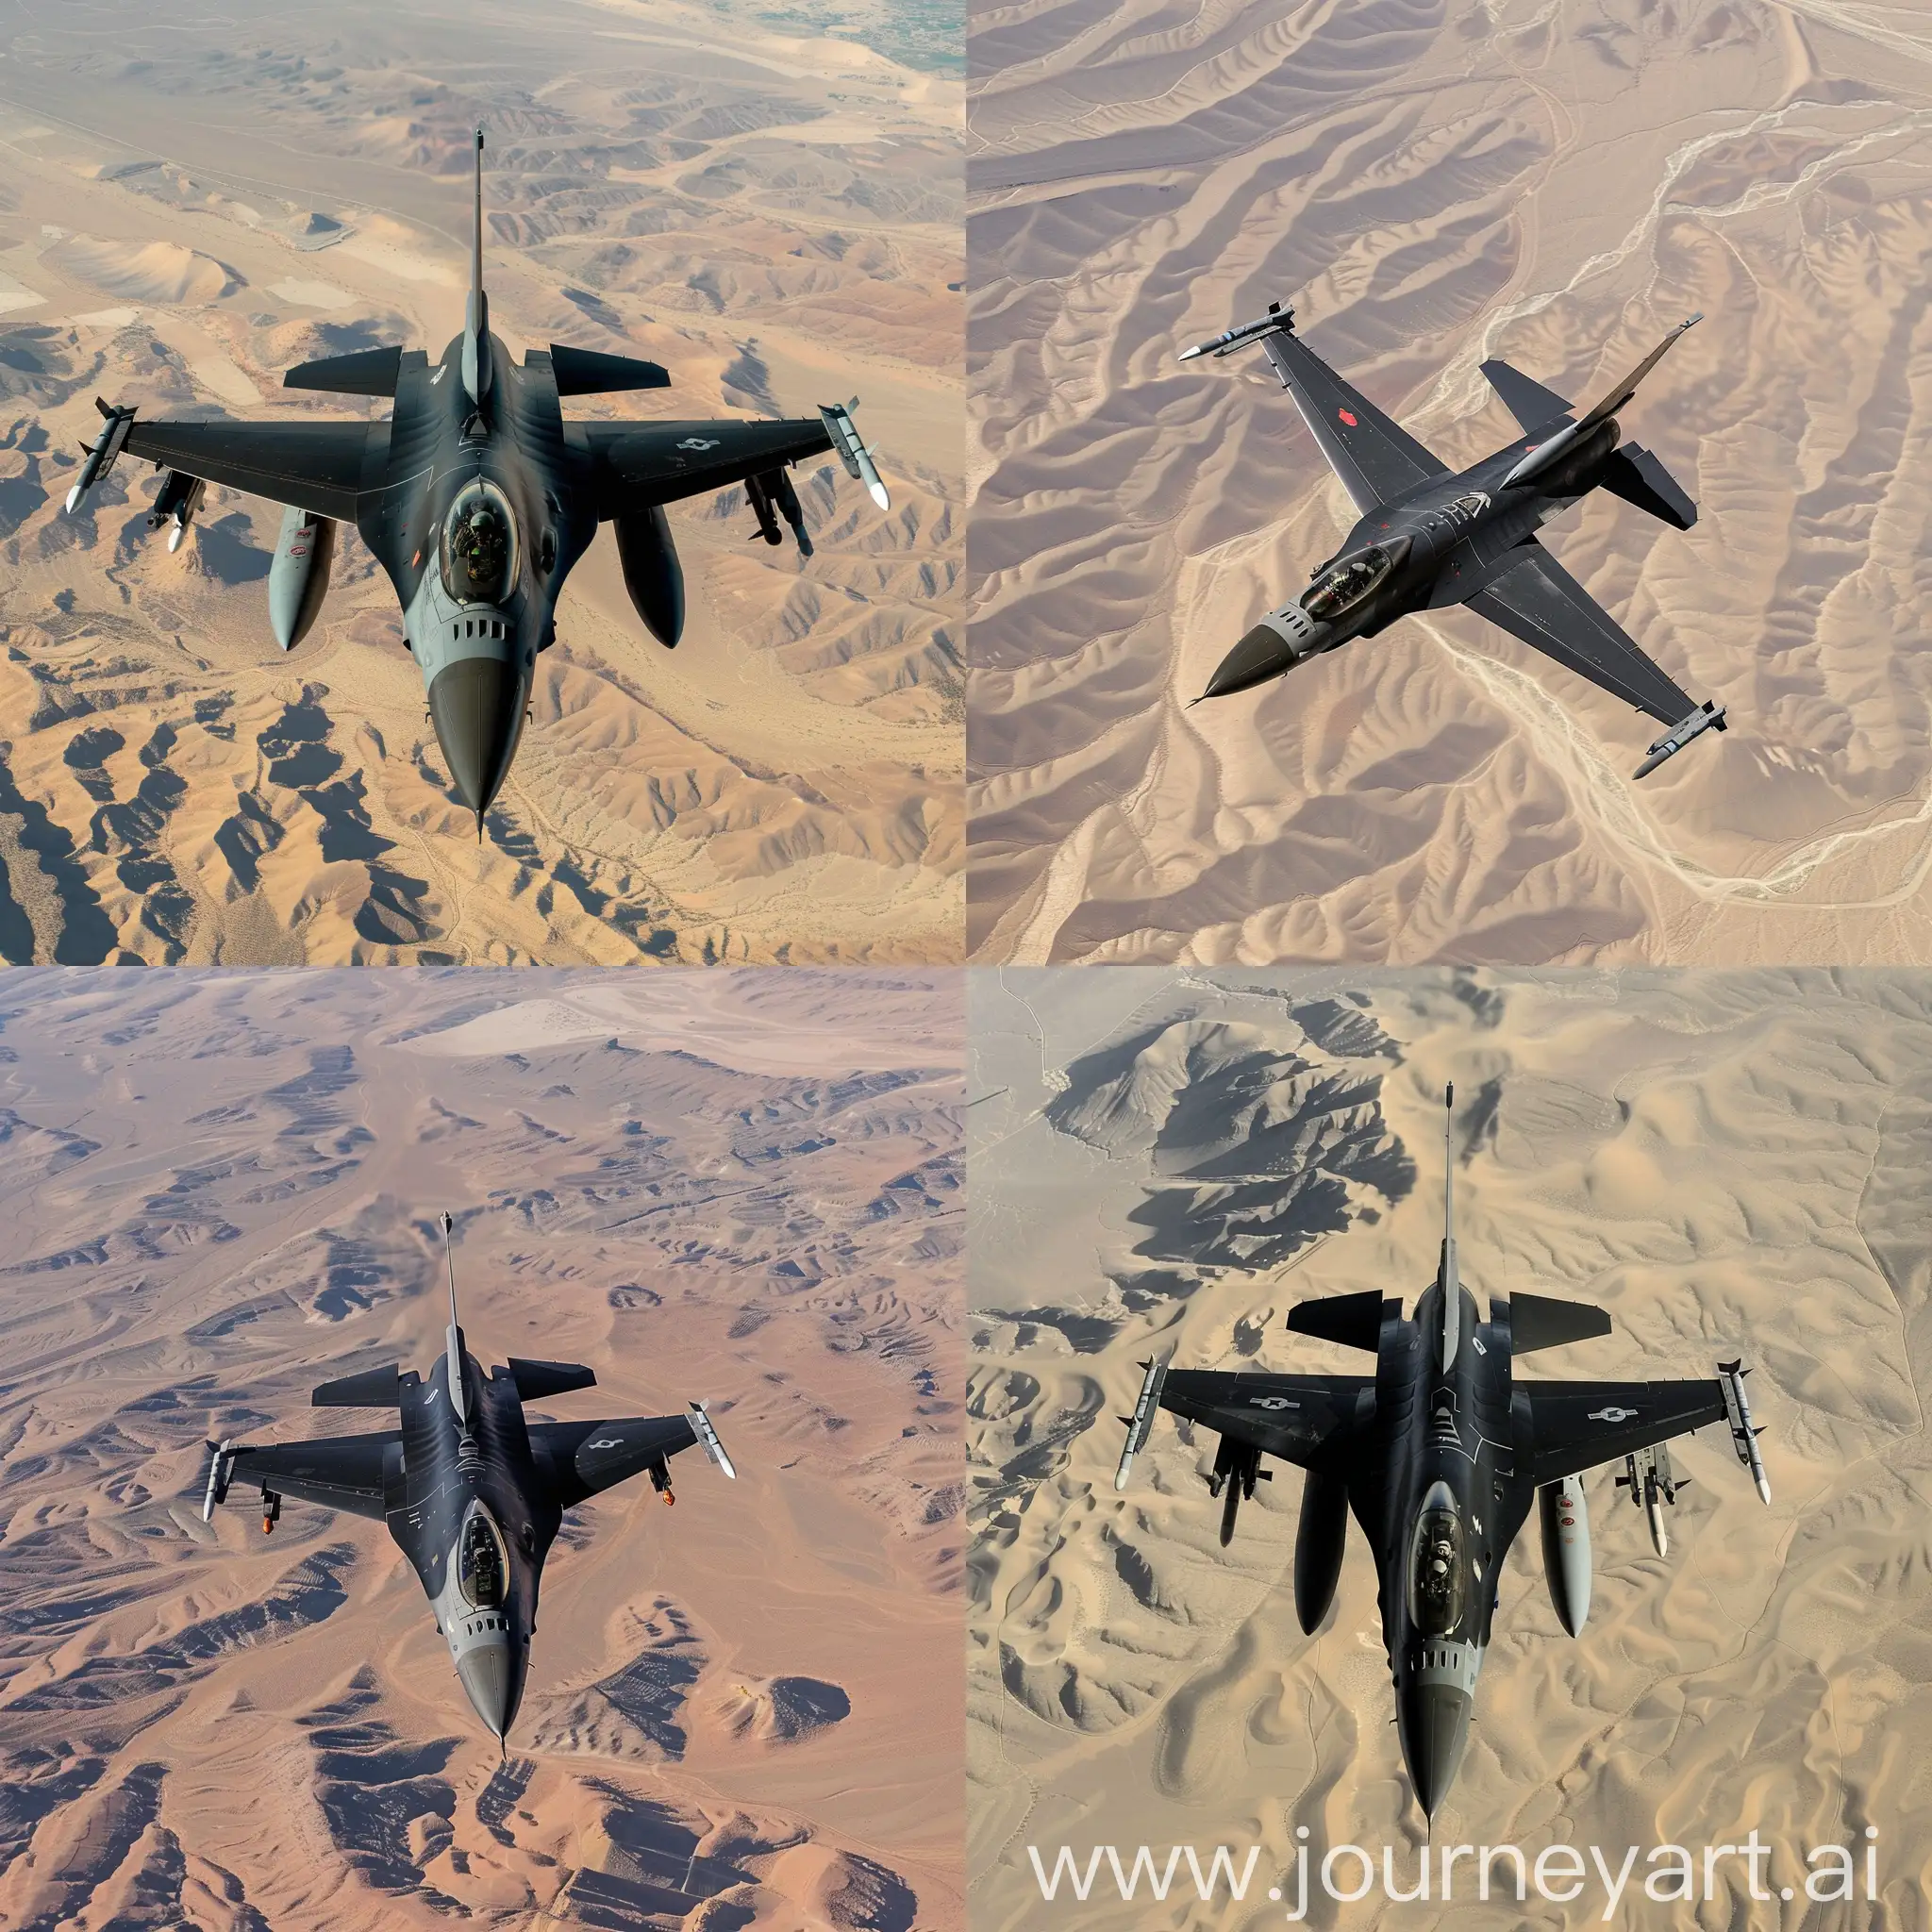 A black F16 plane flies over the desert